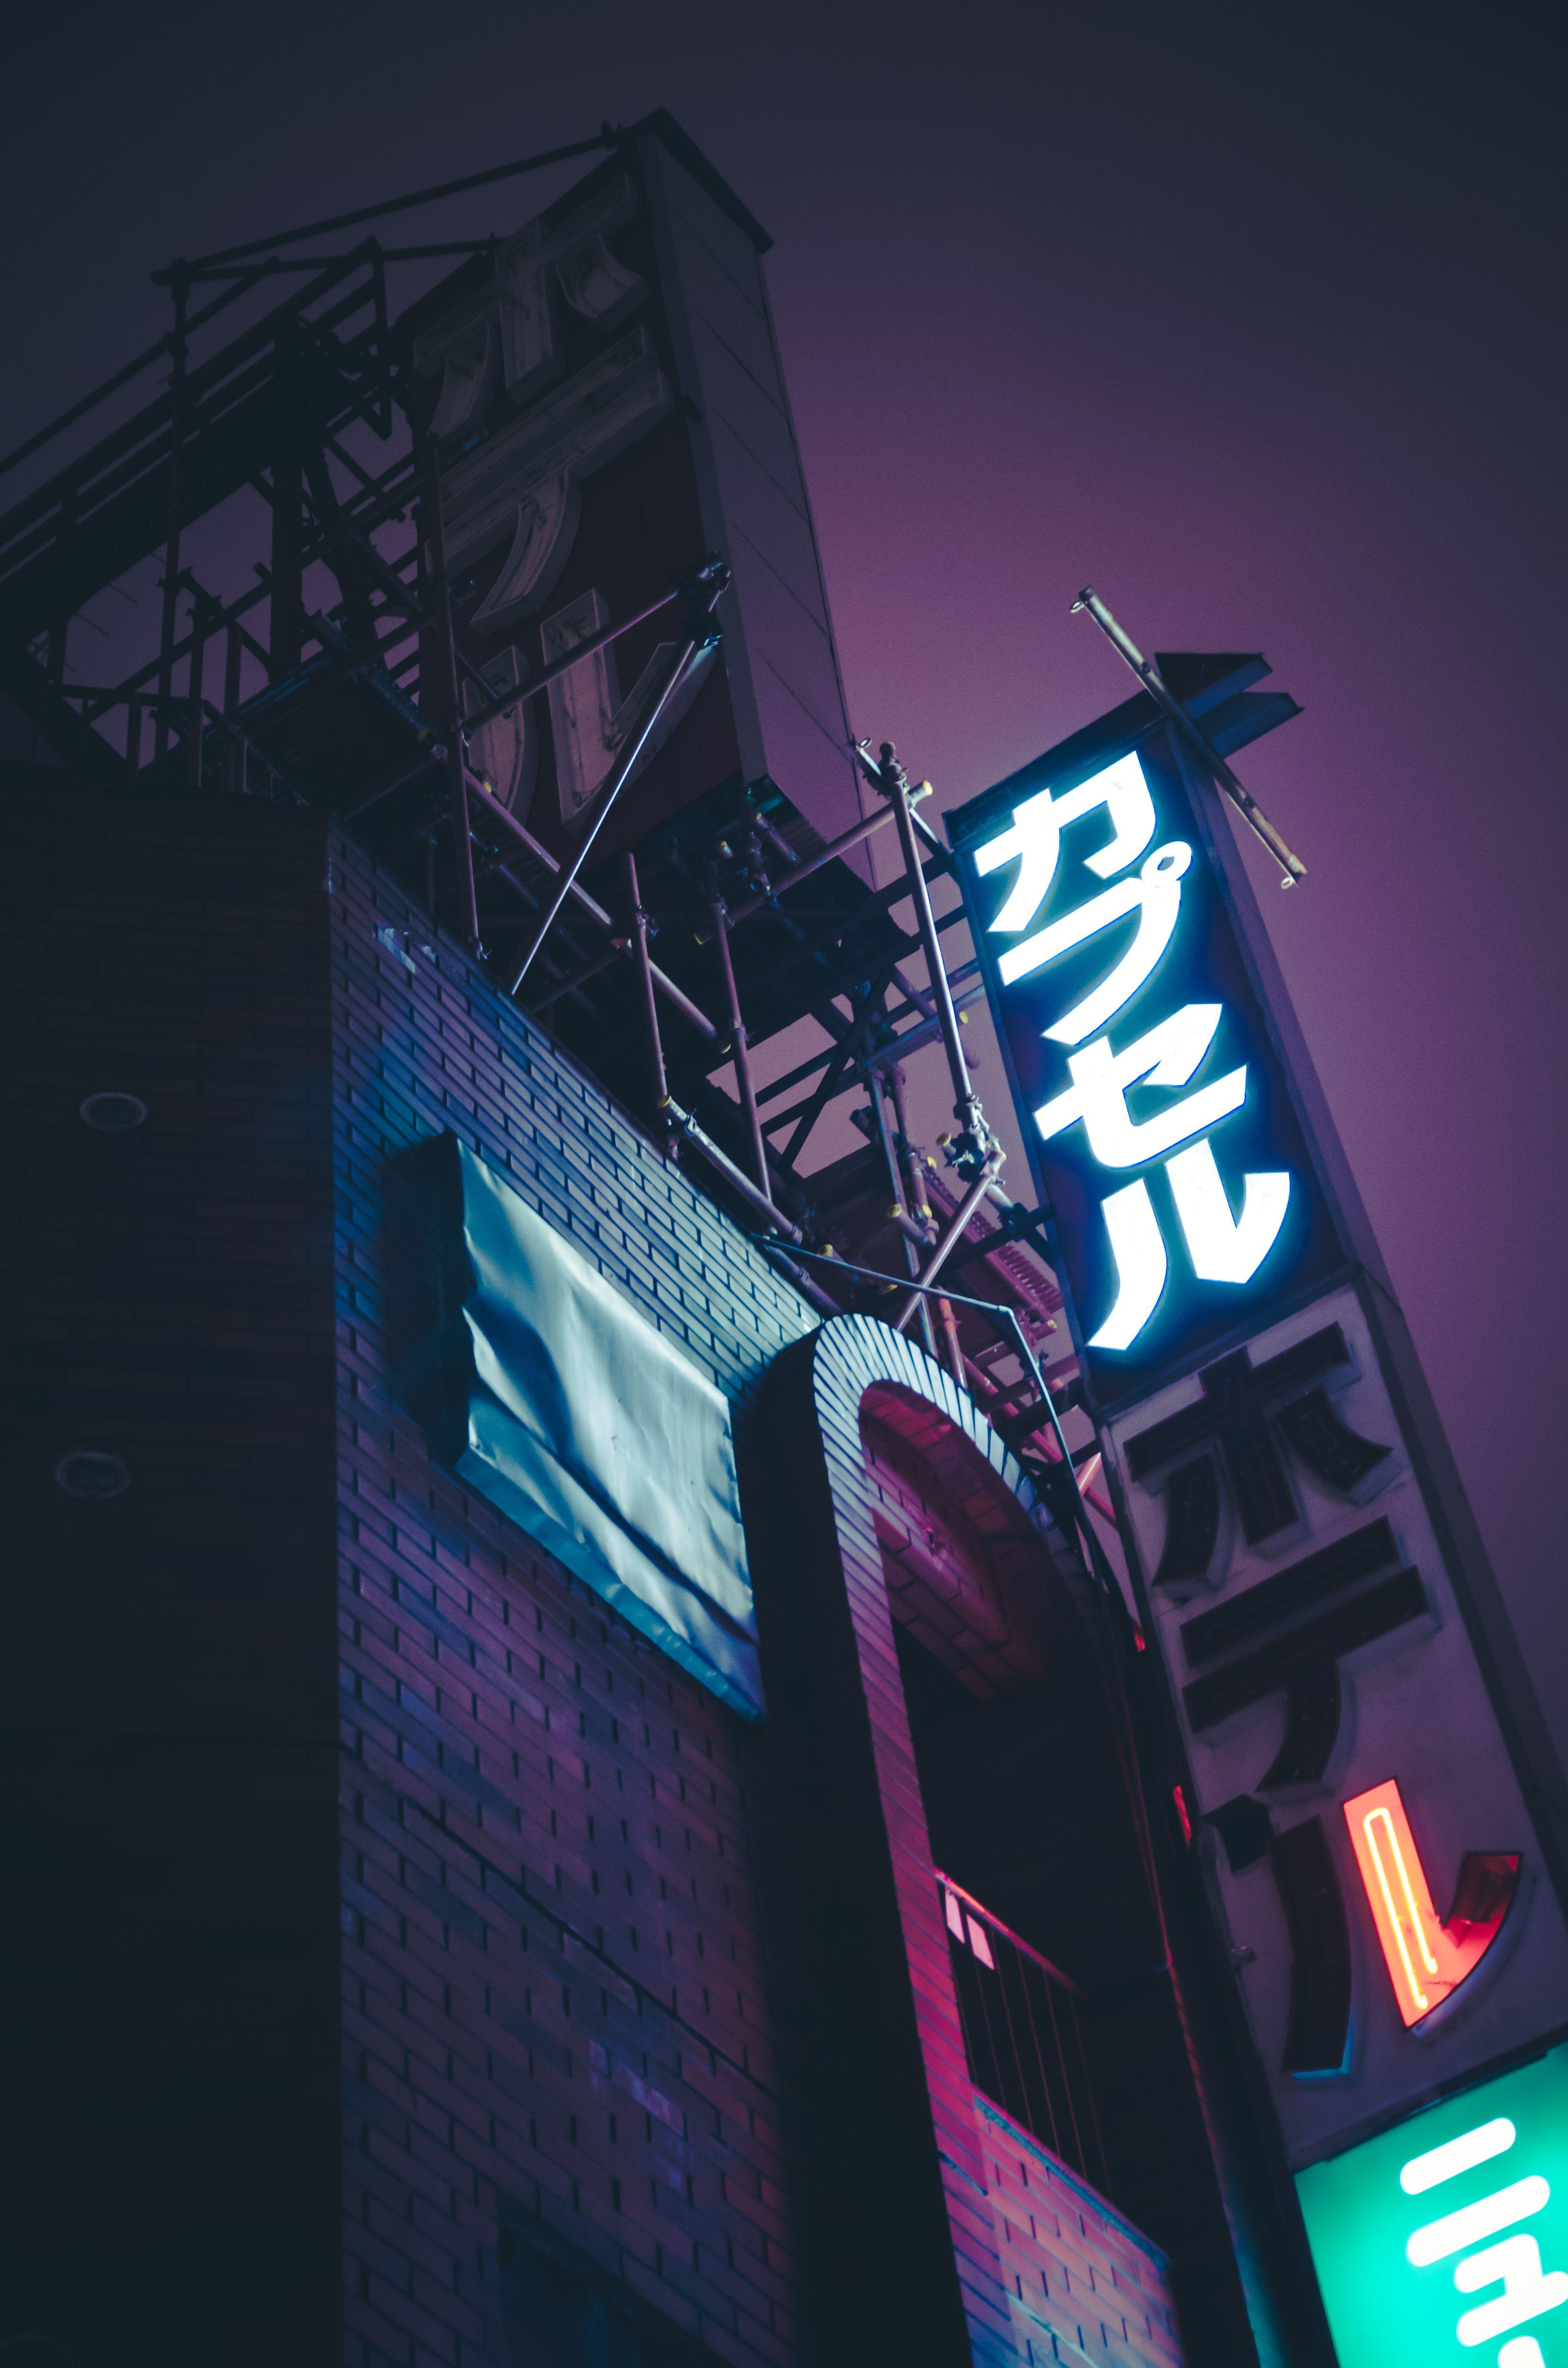 Capsule room hotel. Neon signs, Japanese aesthetic